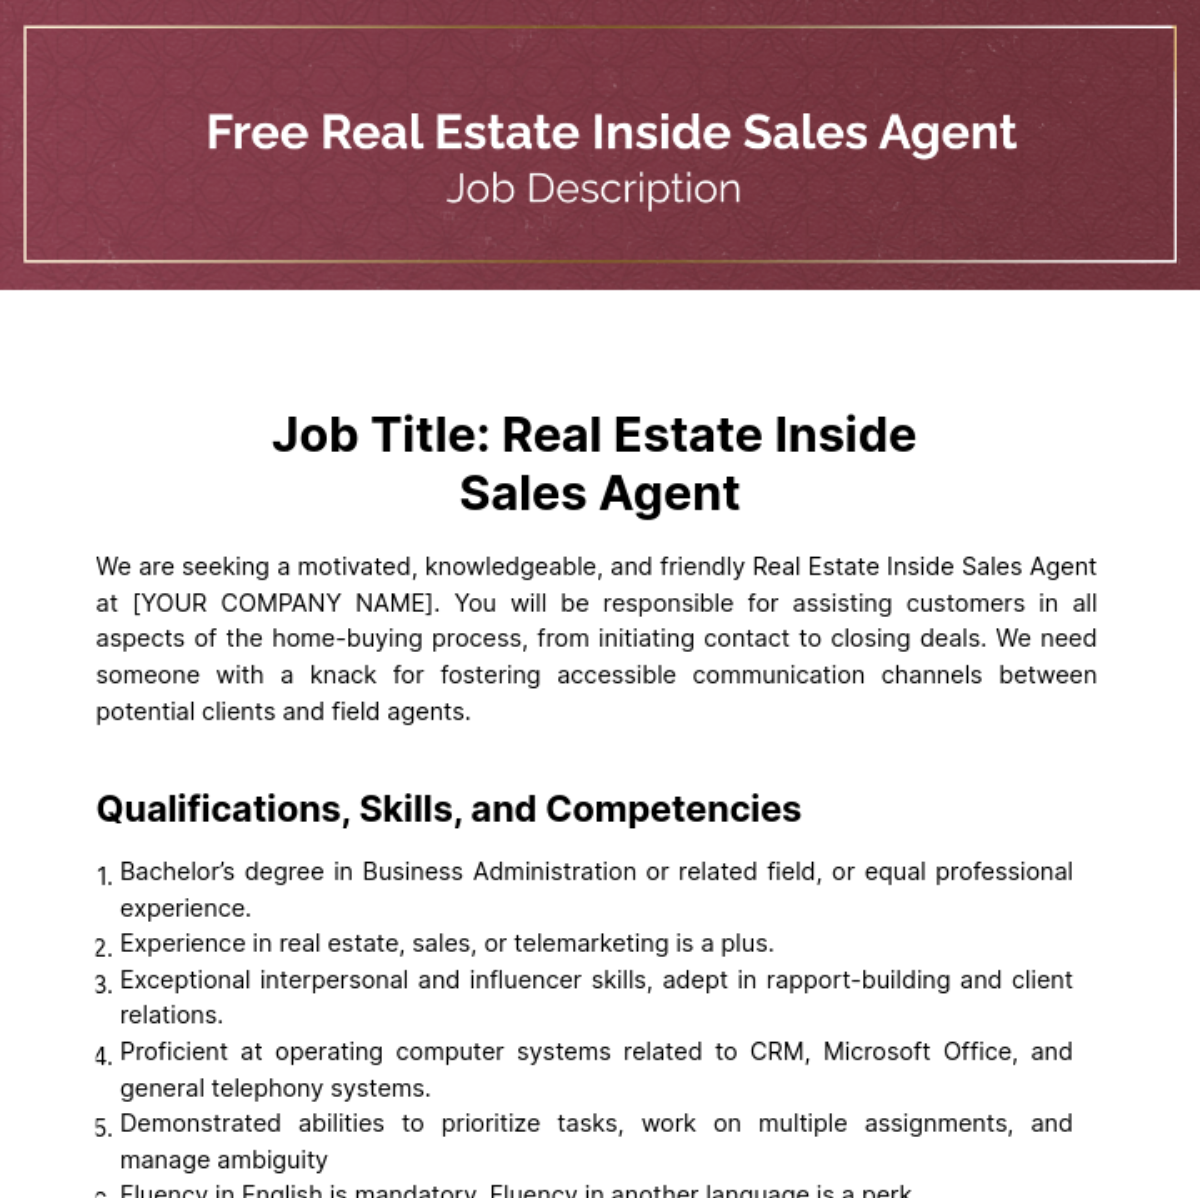 Real Estate Inside Sales Agent Job Description Template